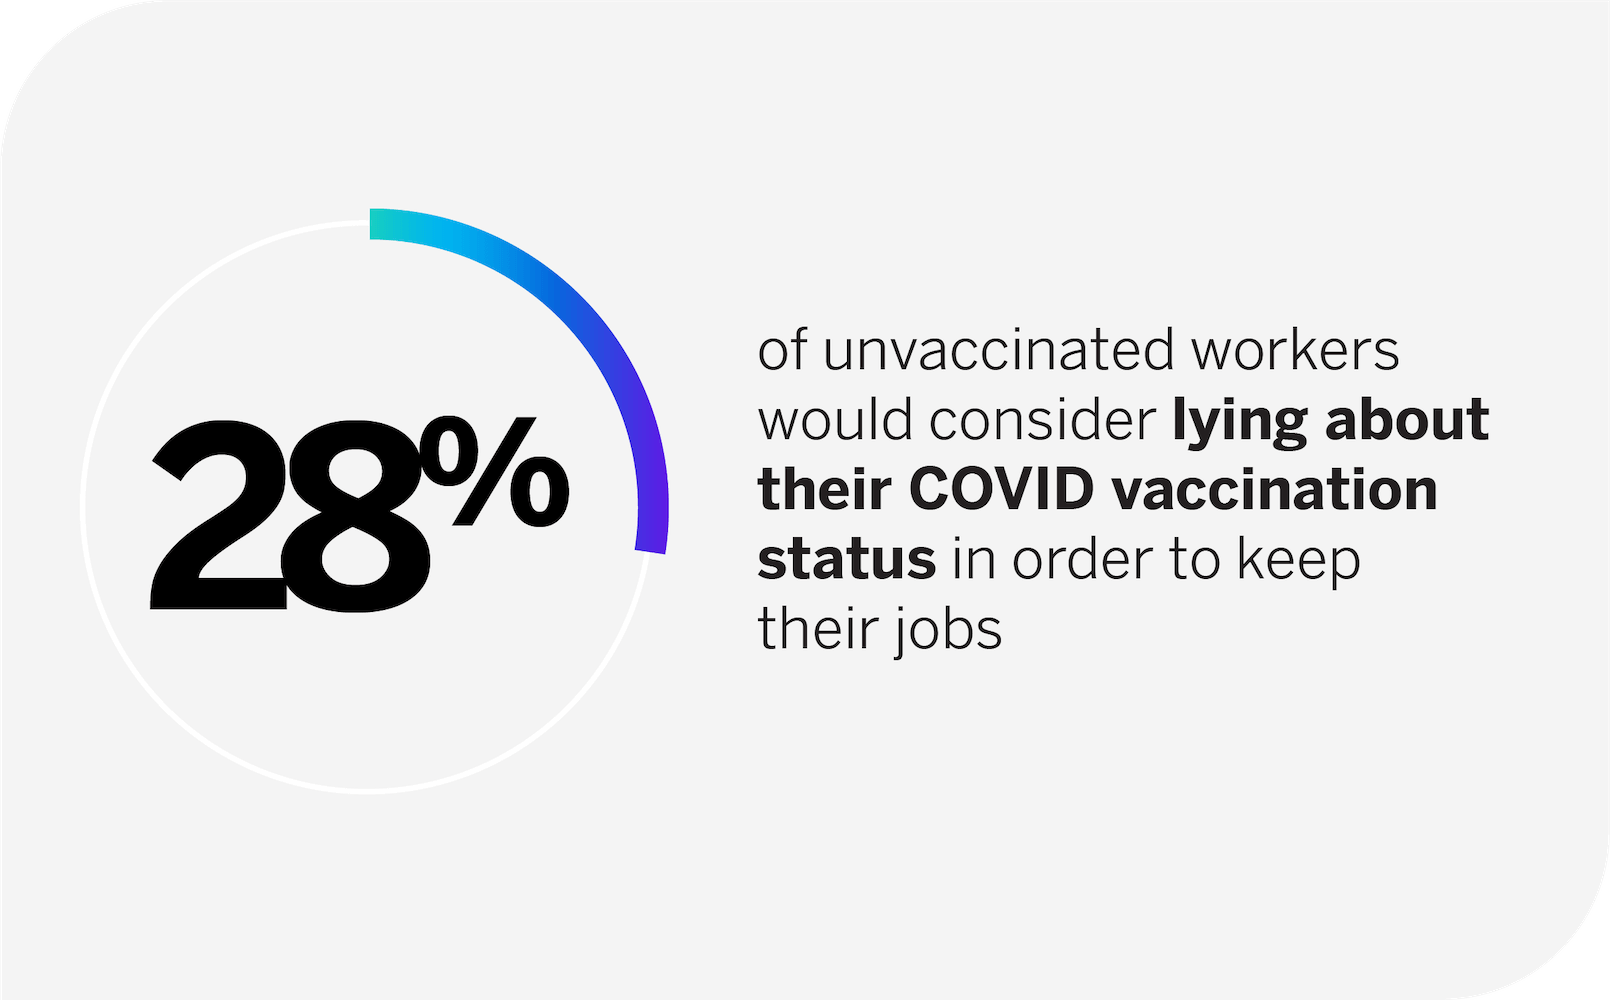 Statistic regarding unvaccinated workers